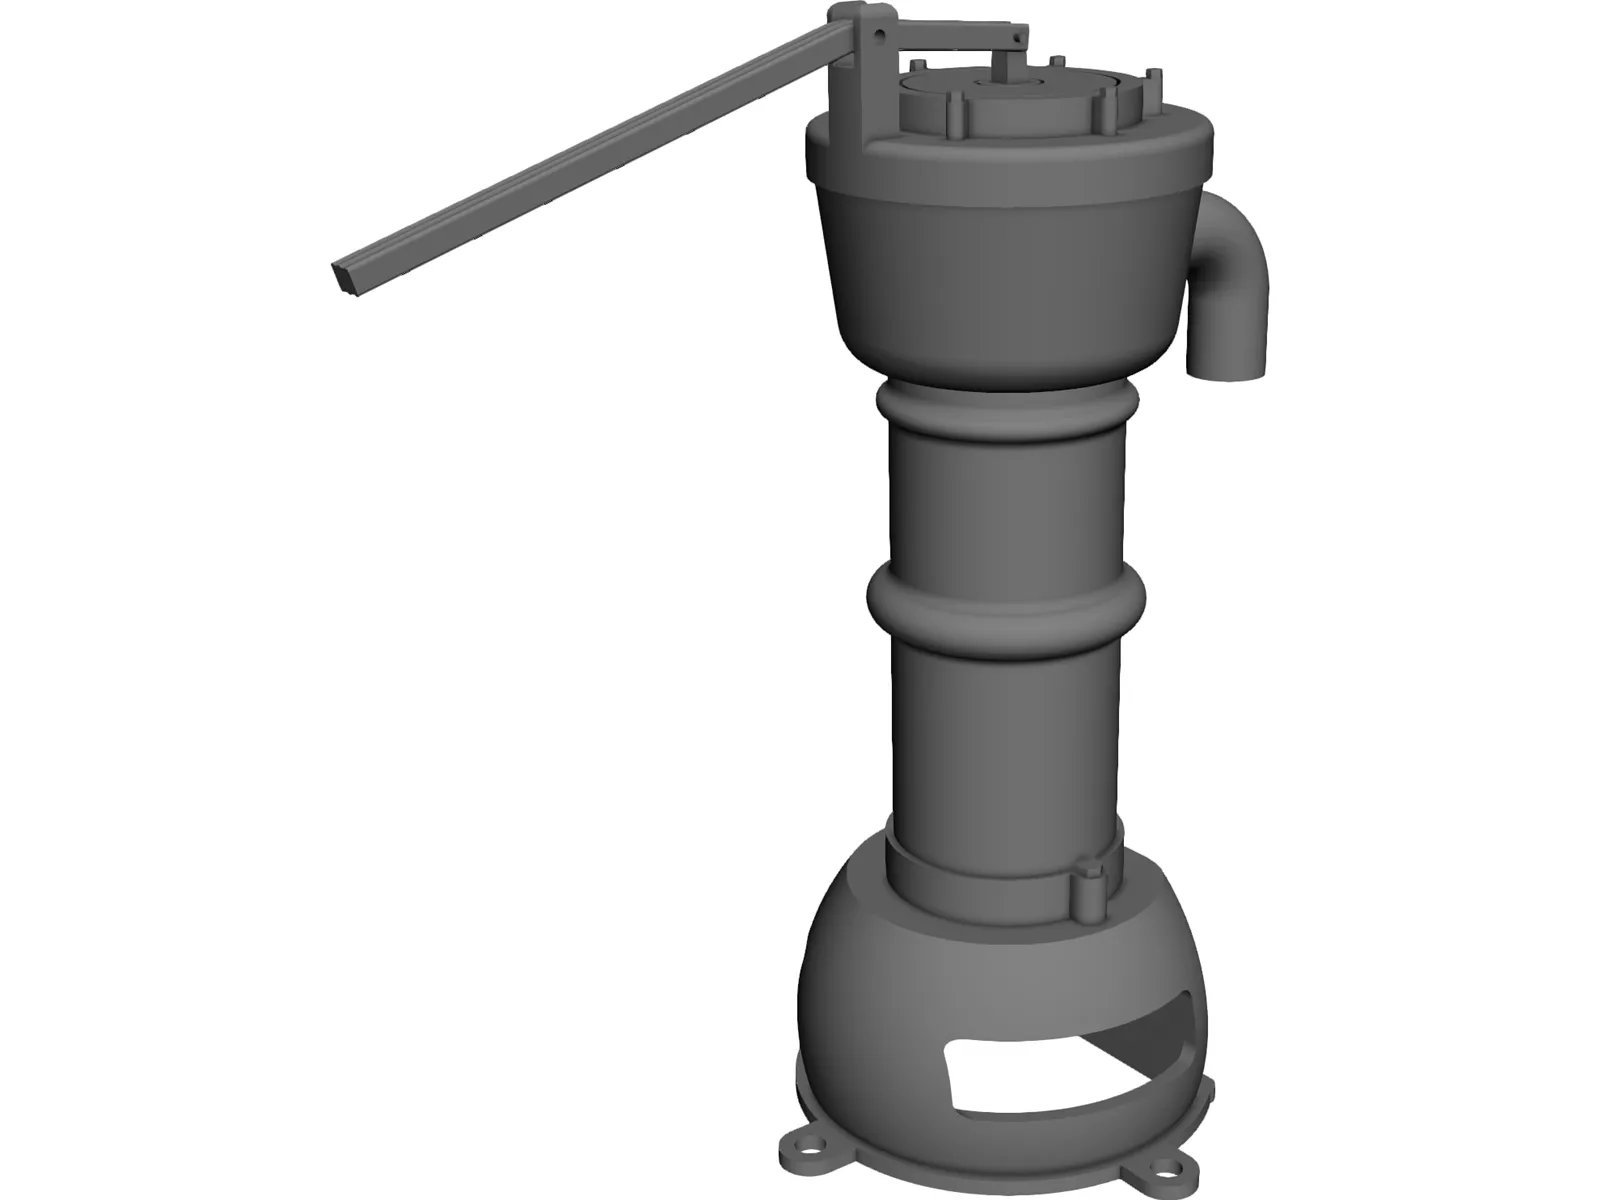 Water Hand Pump 3D Model